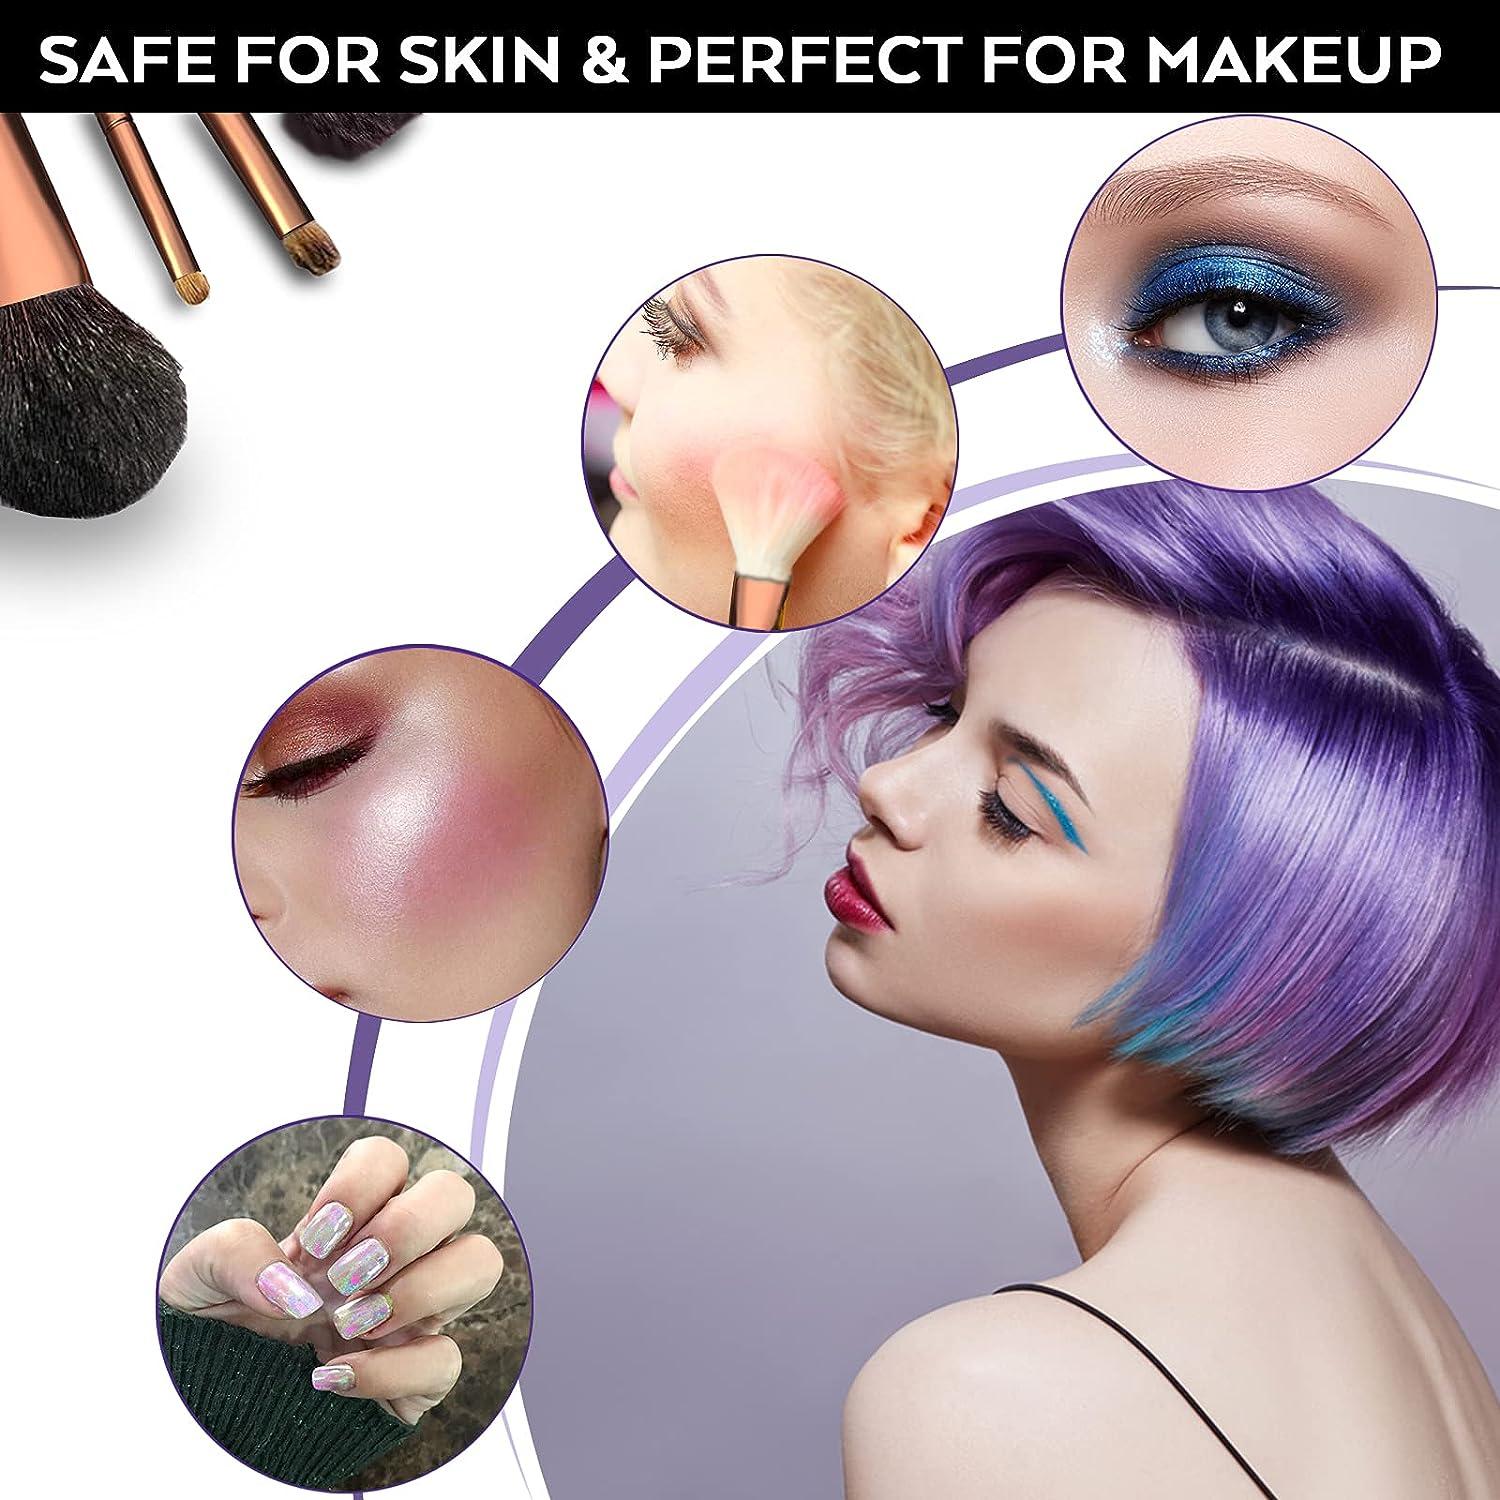 Mica Pigment Colour Powder Cosmetic Soap Bath Bomb Eyeshadow Nail Art Face  Body